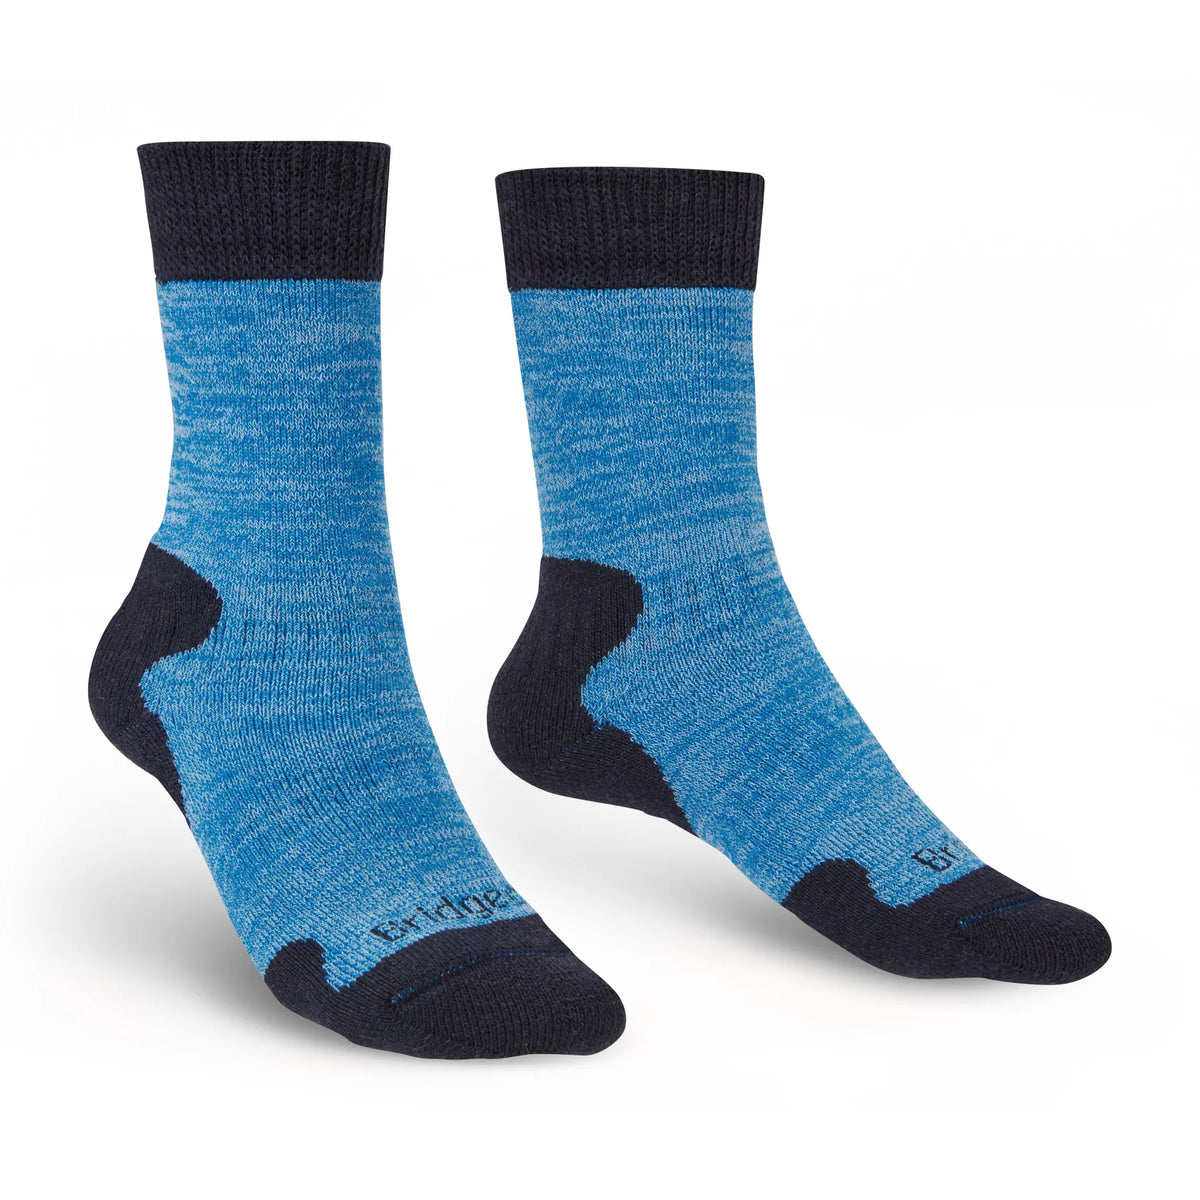 Bridgedale Hike Heavyweight Performance Boot Socks (Women's) Blue Marl - Find Your Feet Australia Hobart Launceston Tasmania